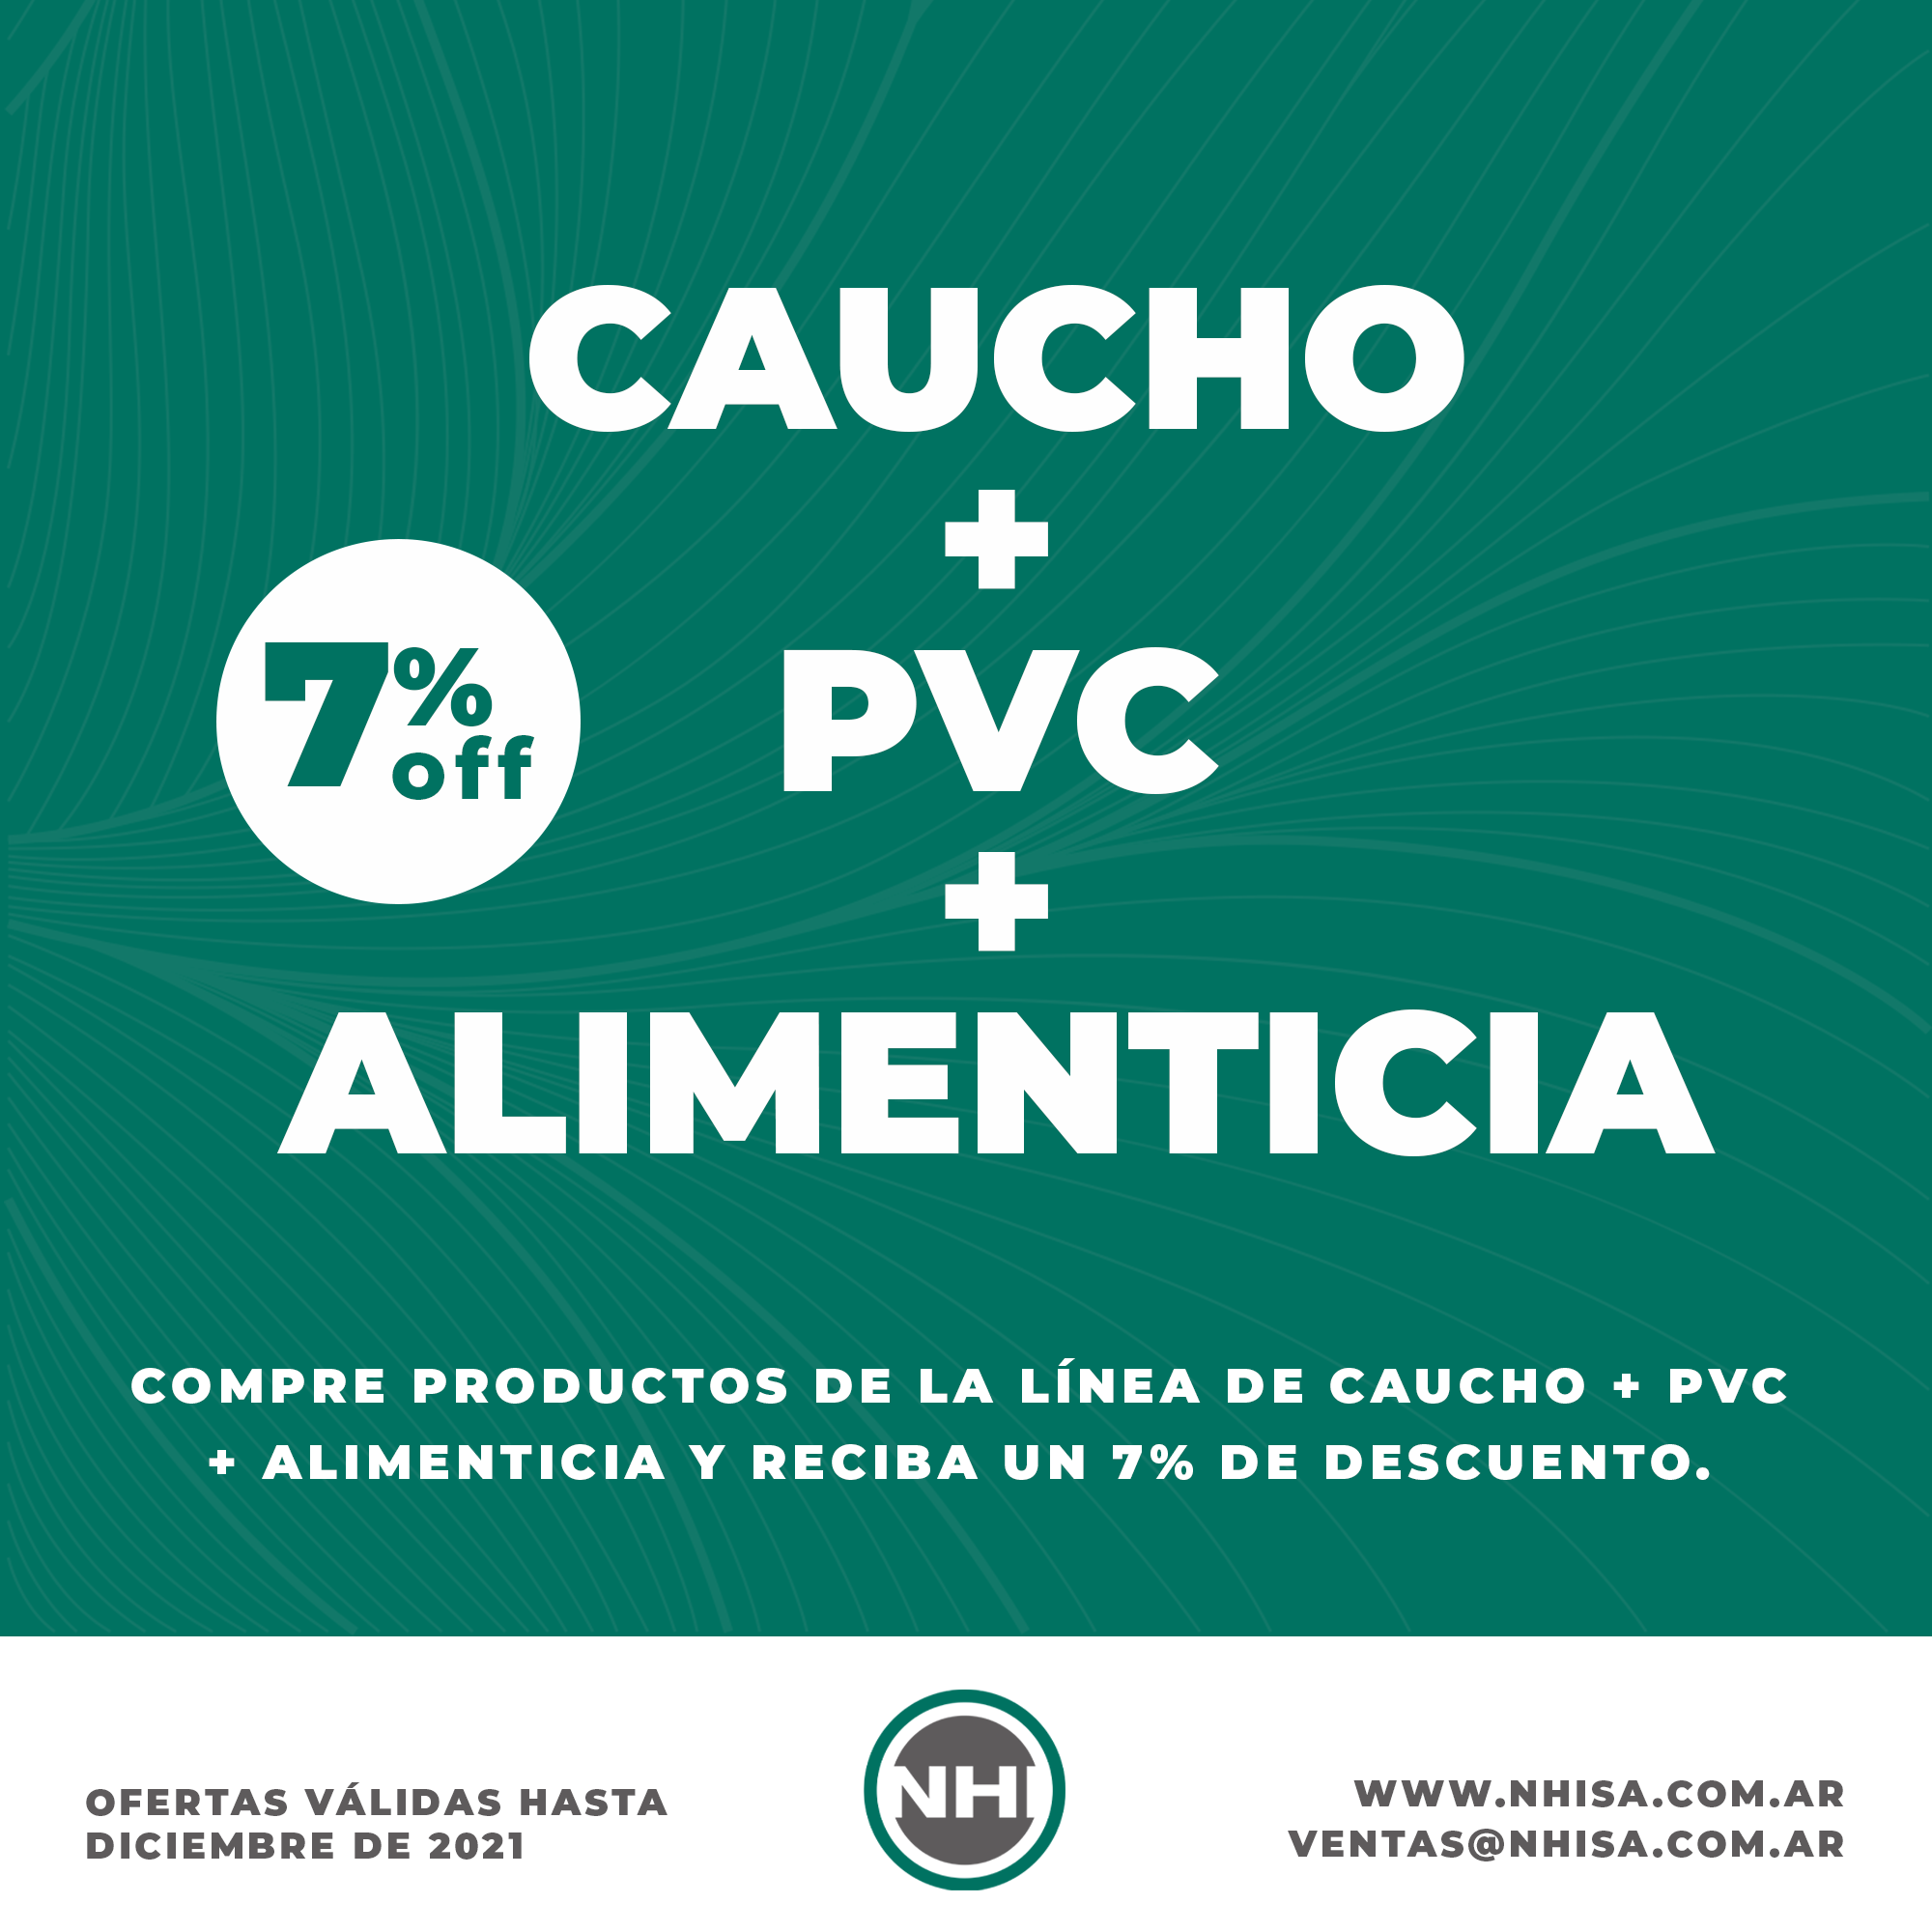 Caucho + PVC + Alimentacion